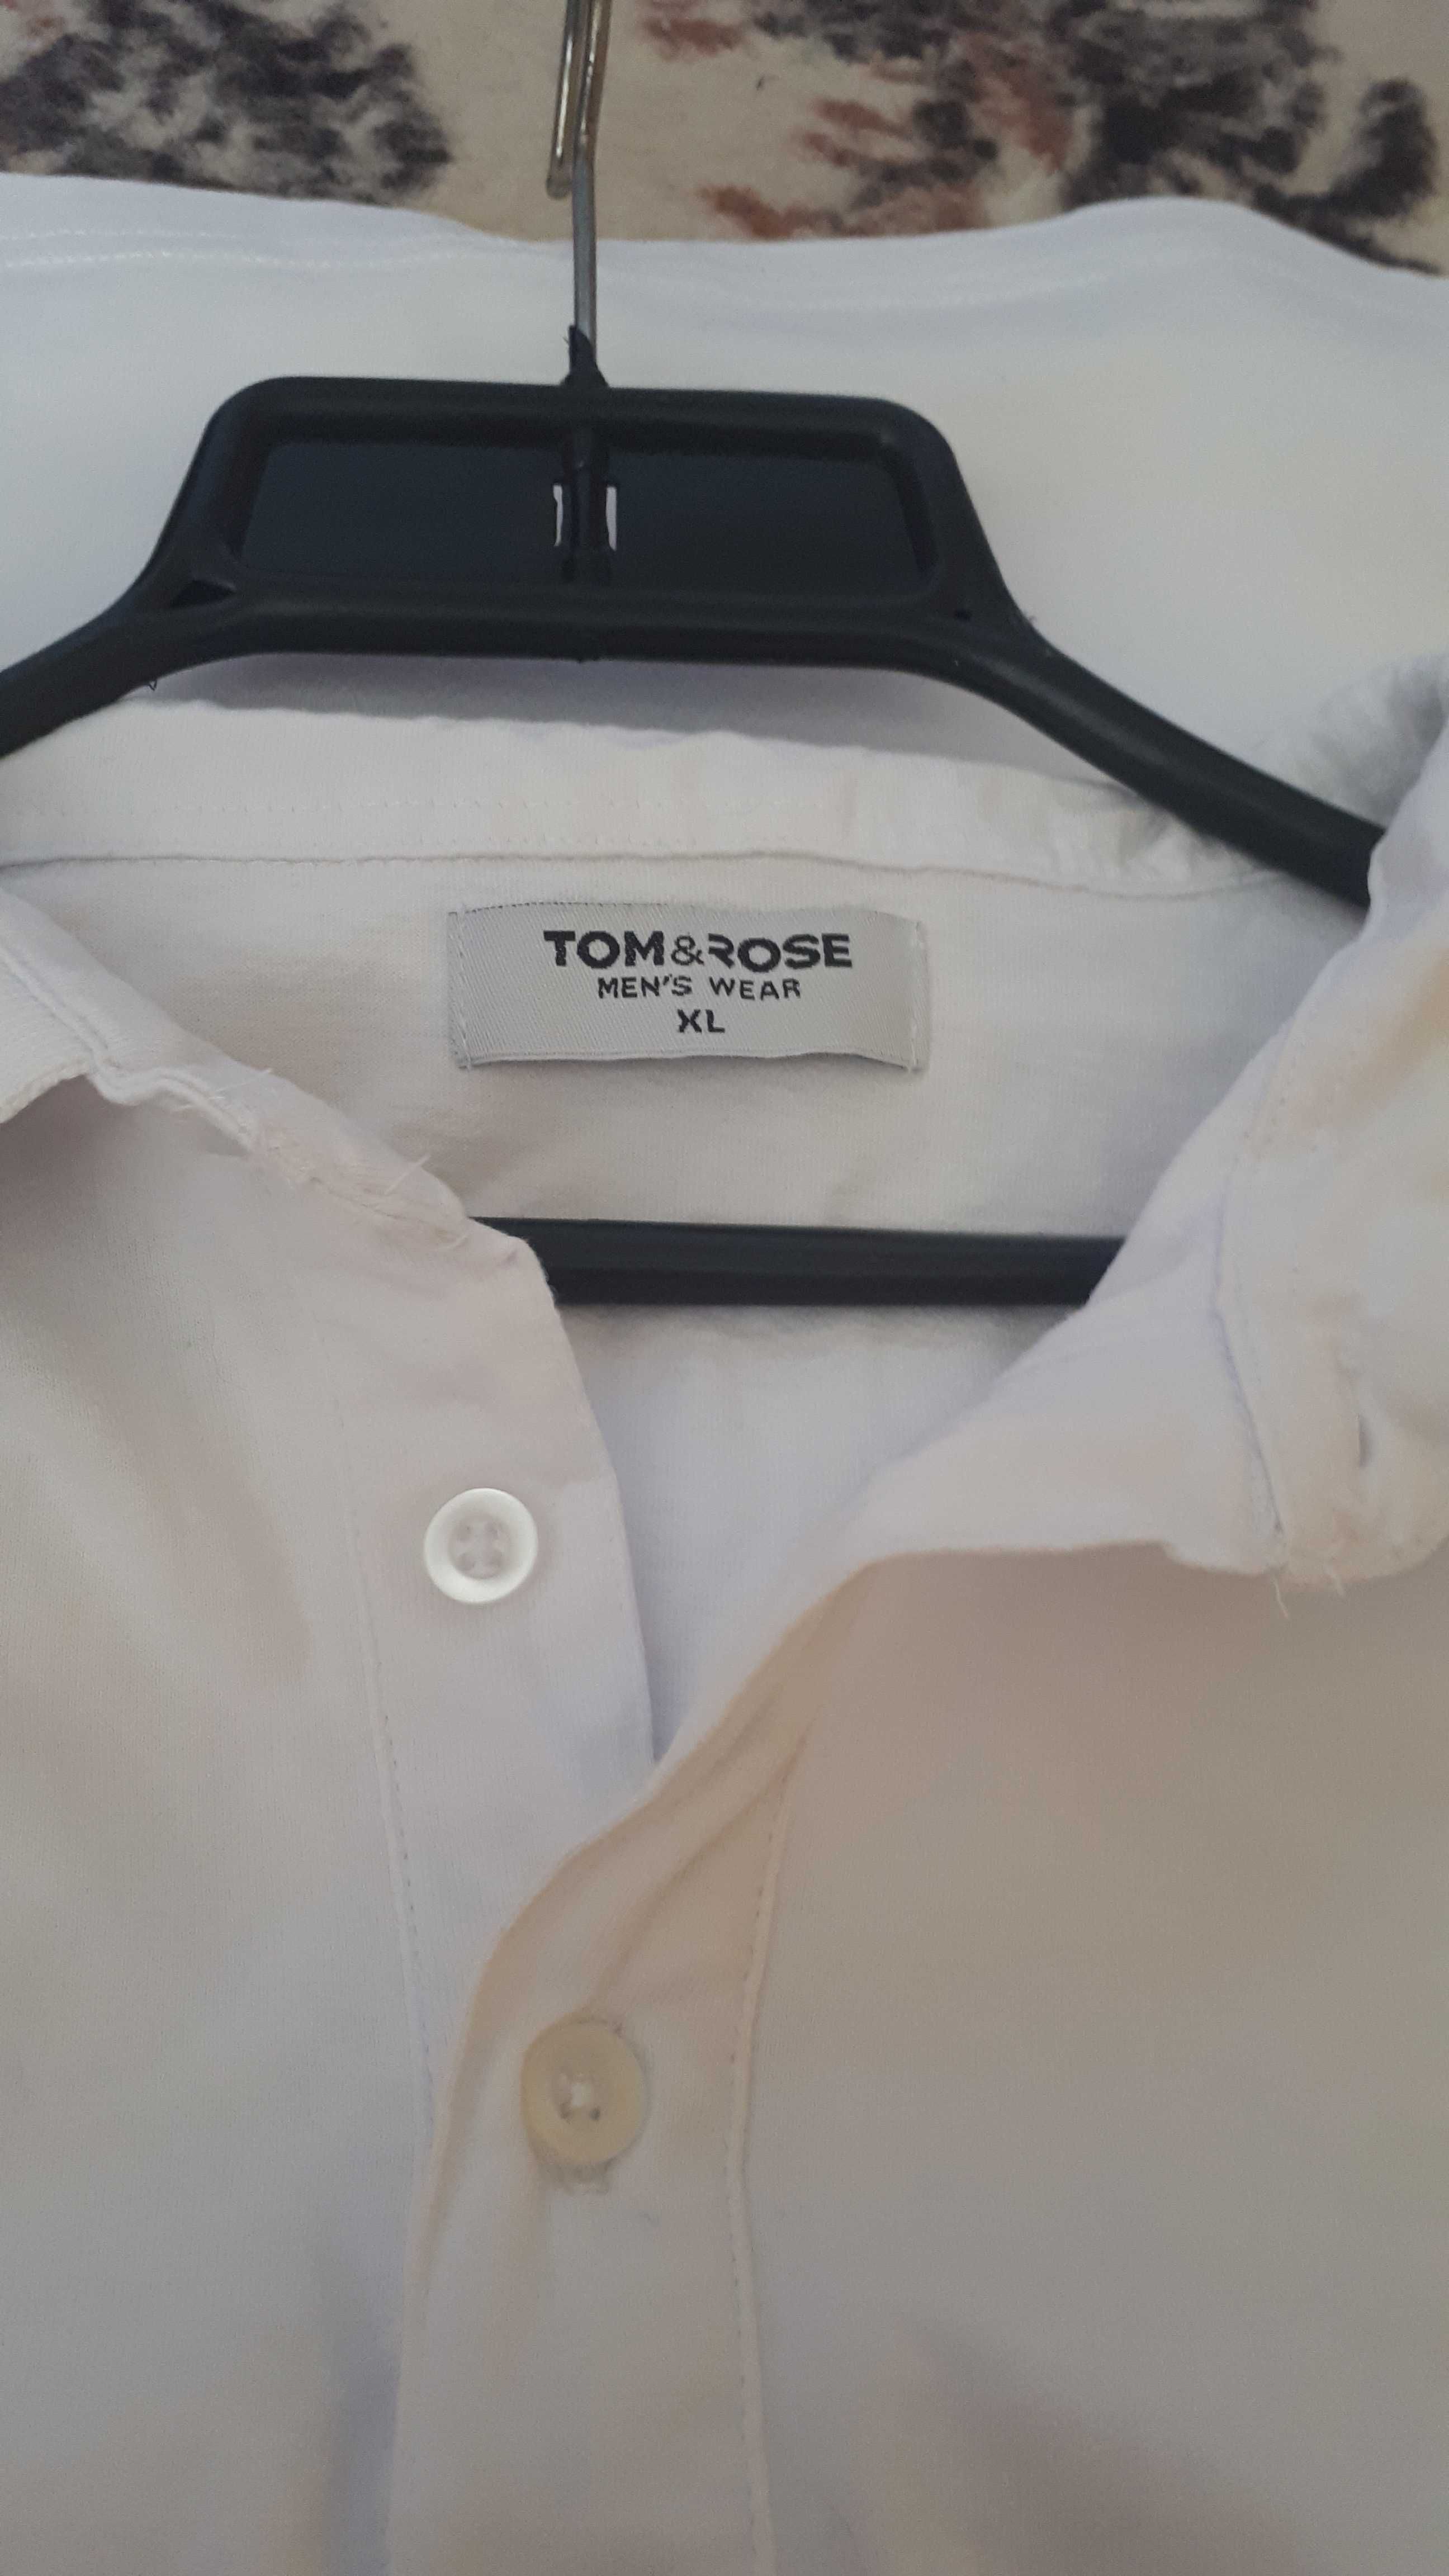 Koszulka polo męska XL Tom&Rose